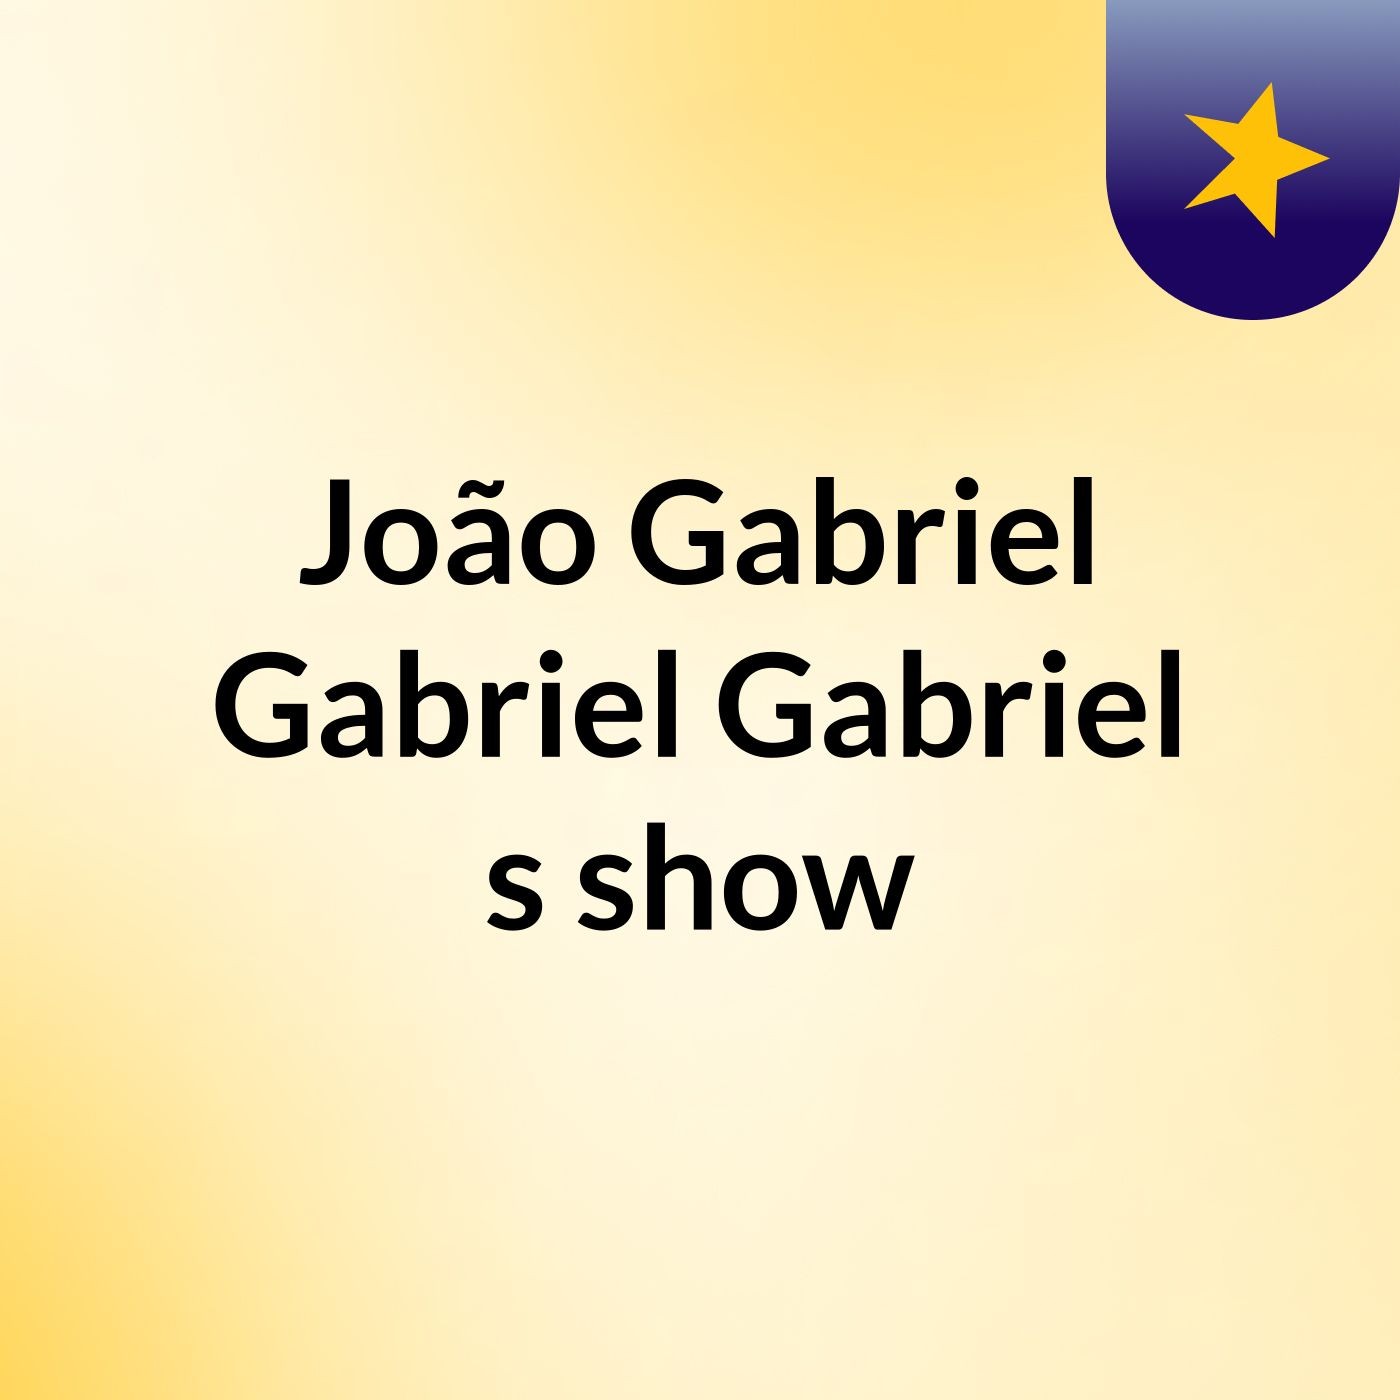 João Gabriel Gabriel Gabriel's show